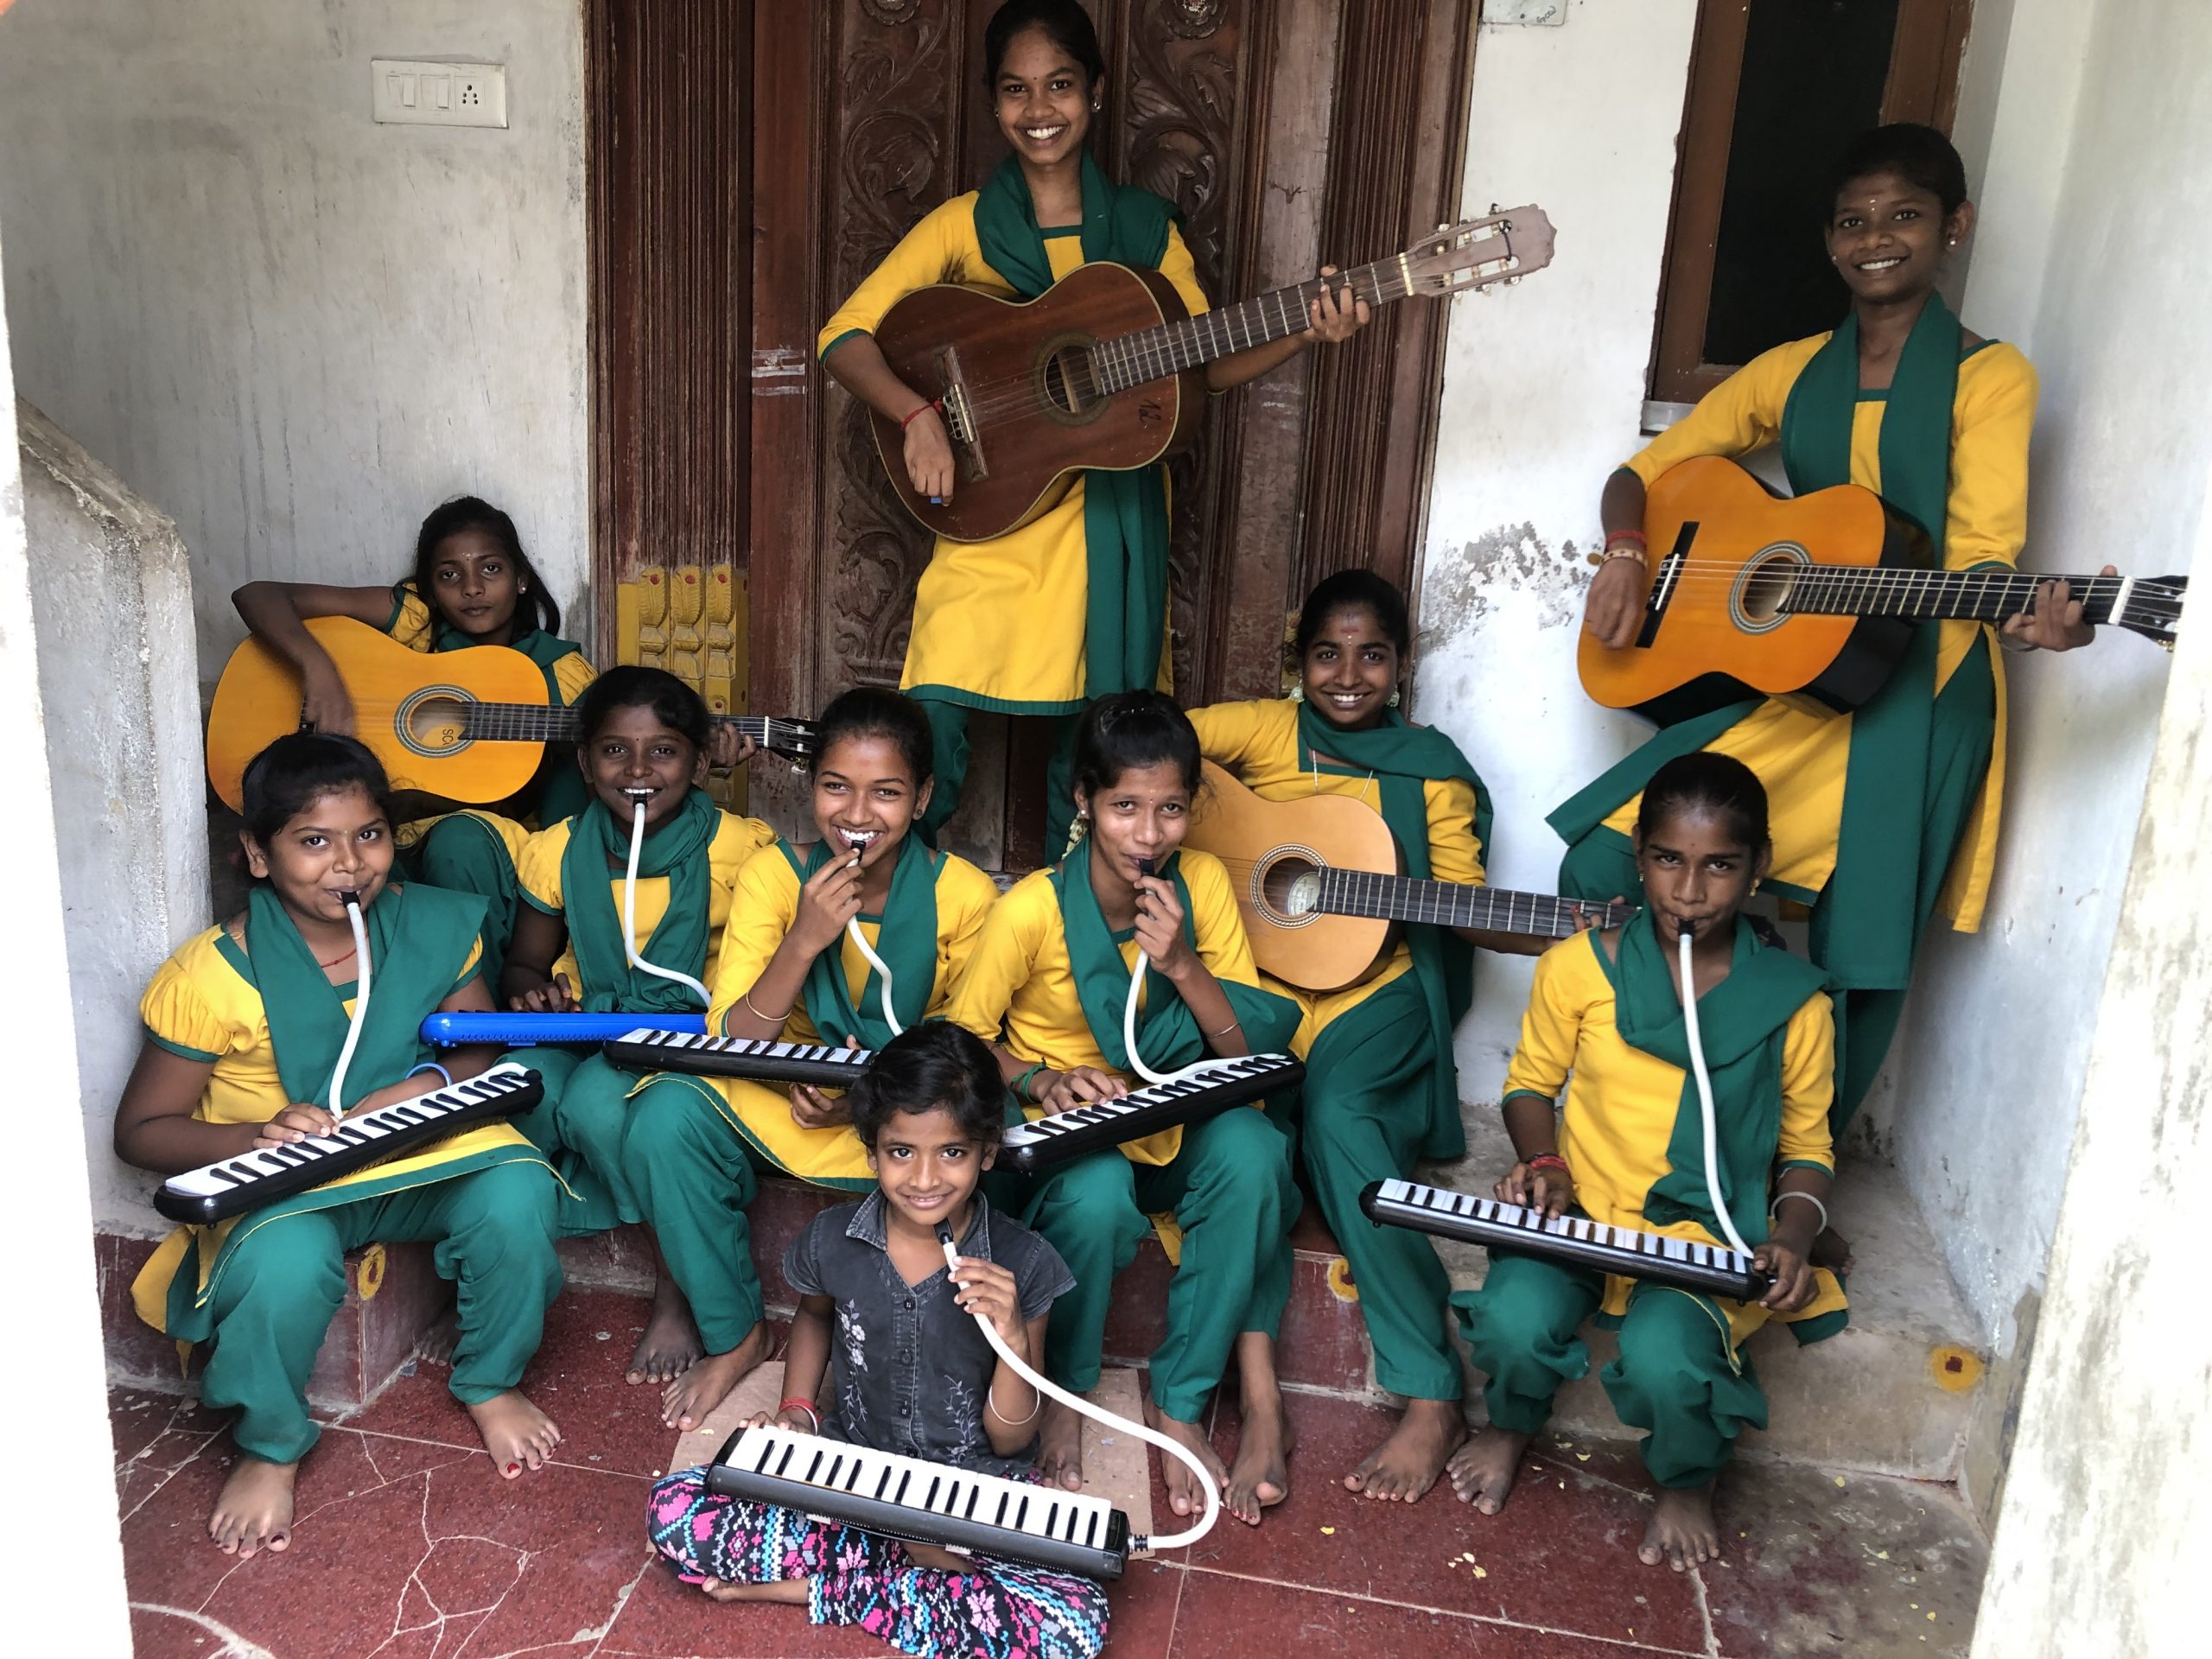 Isai Ragam girls from Mahaveerpuram on the melodica (blow piano) and guitar